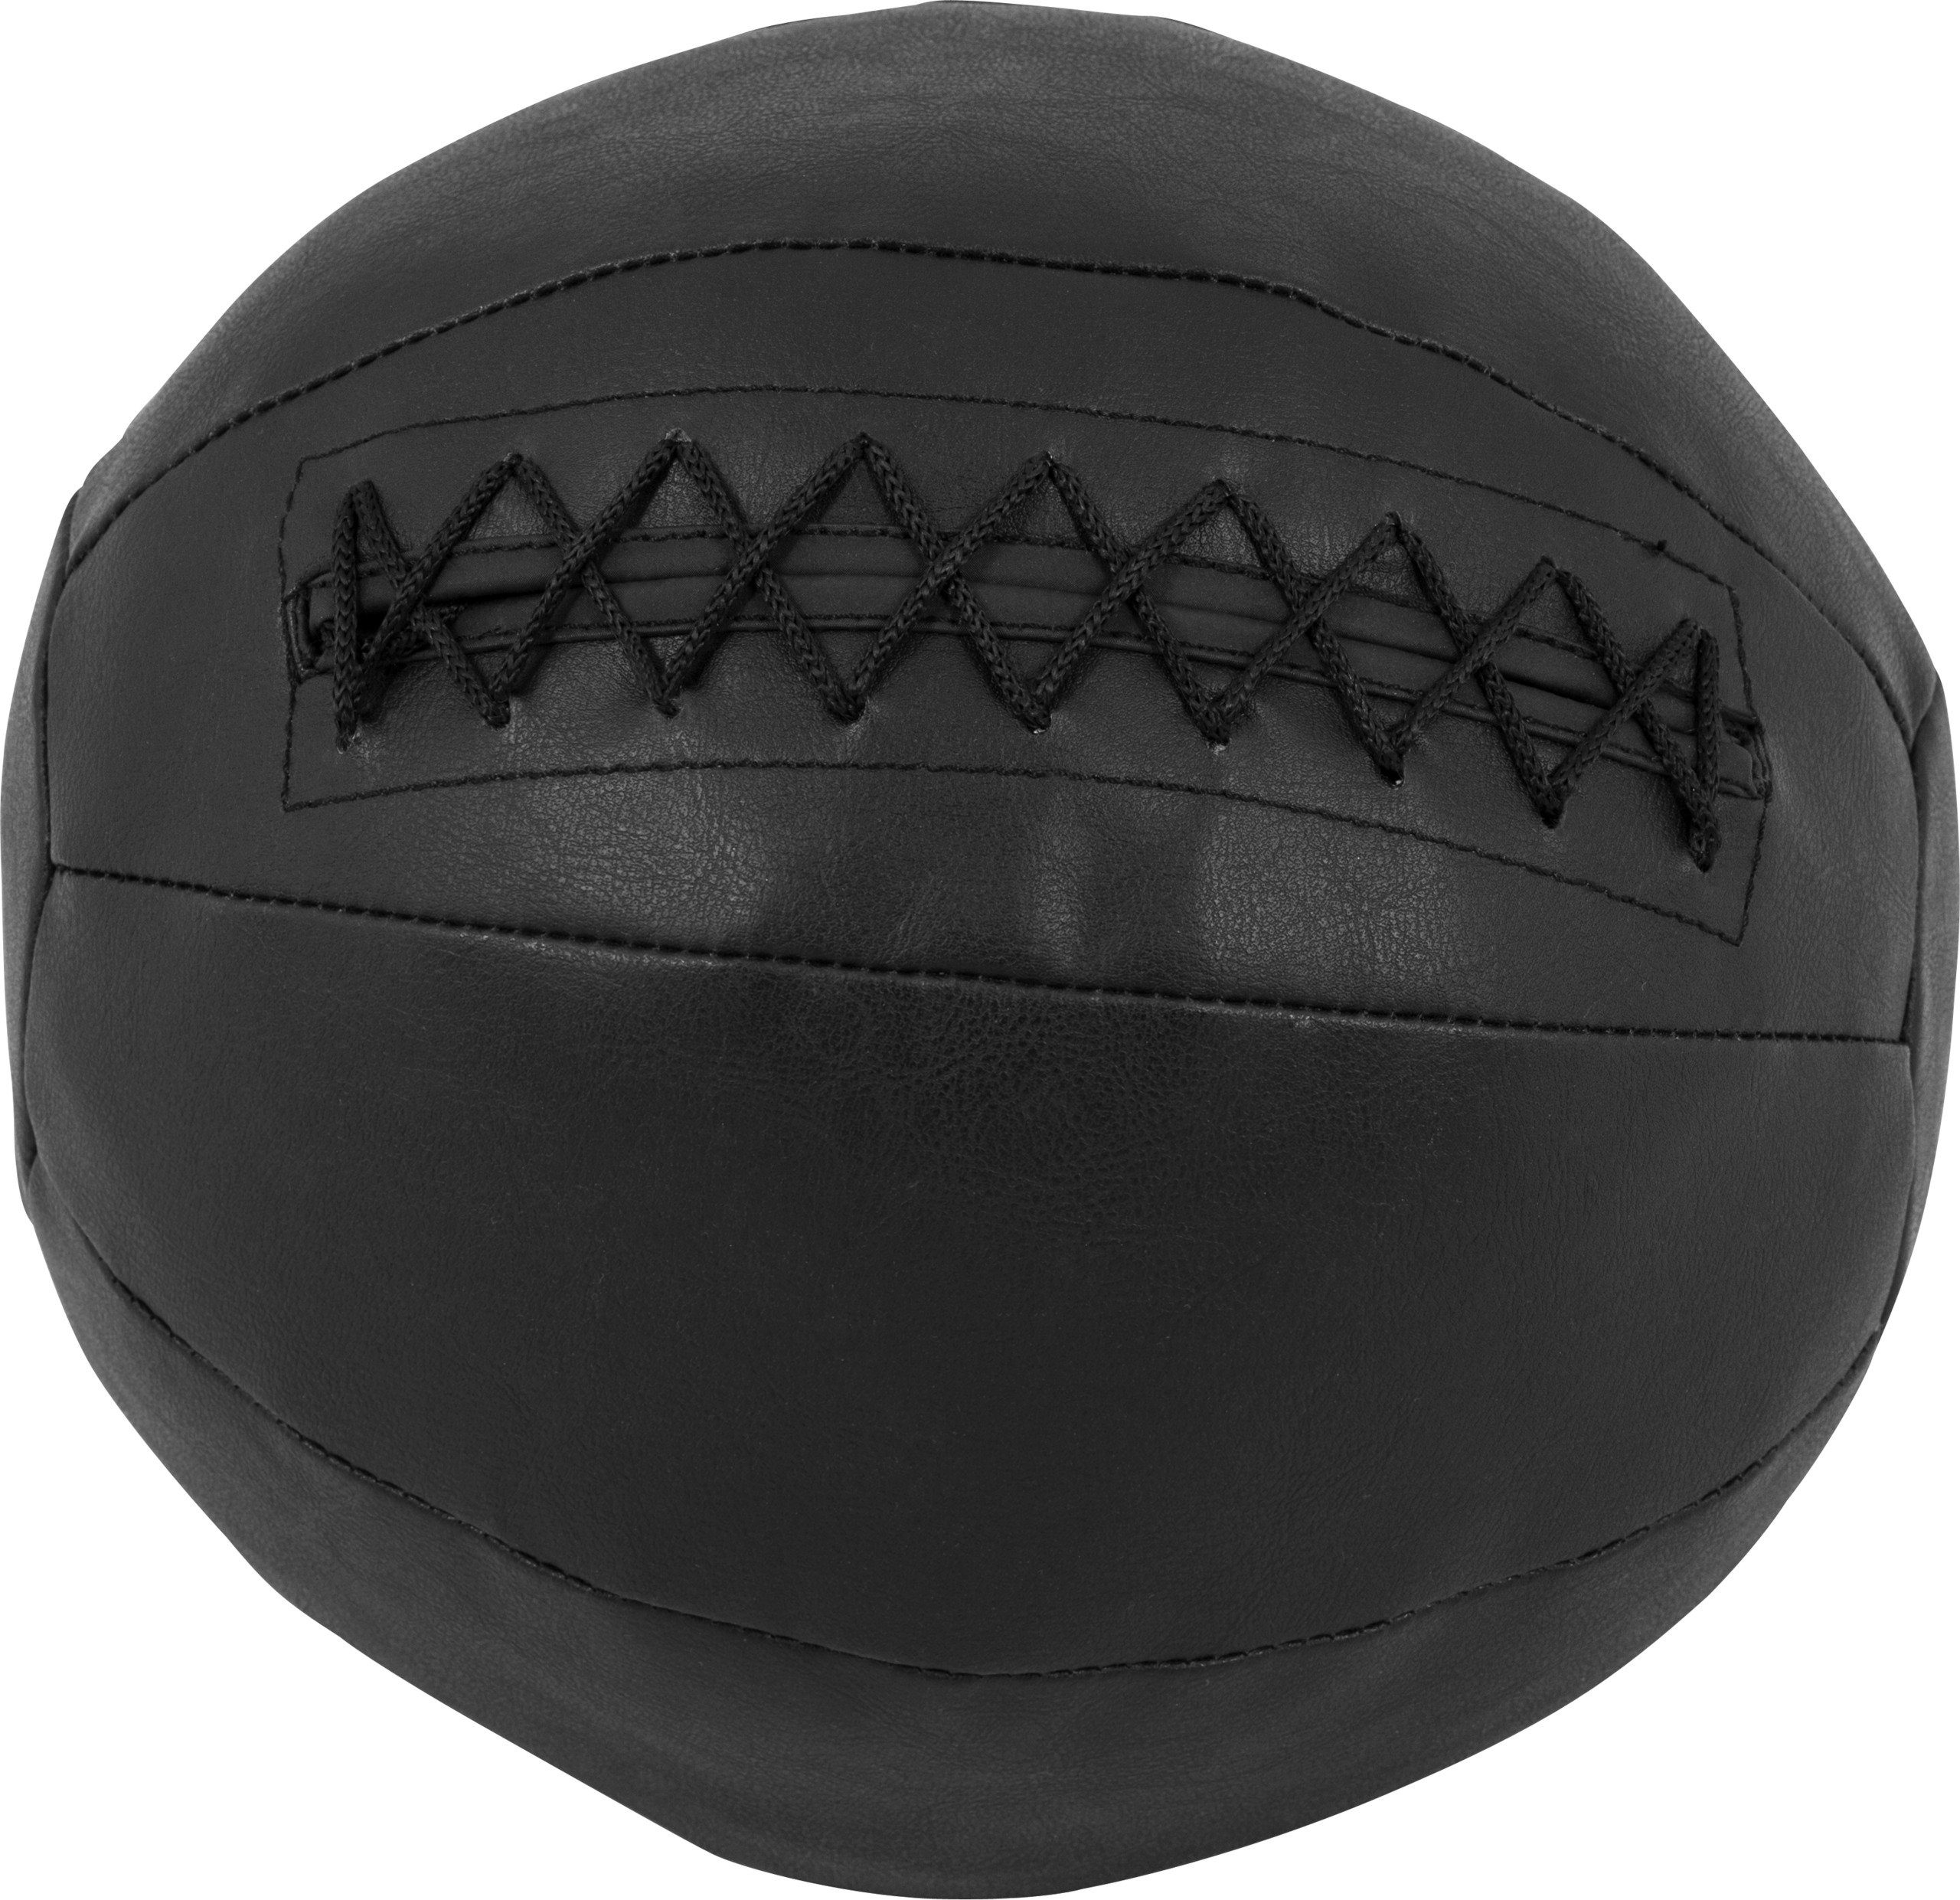 SPORTS Trainingsball, Medizinball aus kg Gewichtsball 29cm, Einzeln/Set, Leder, 1 GORILLA Fitnessball,